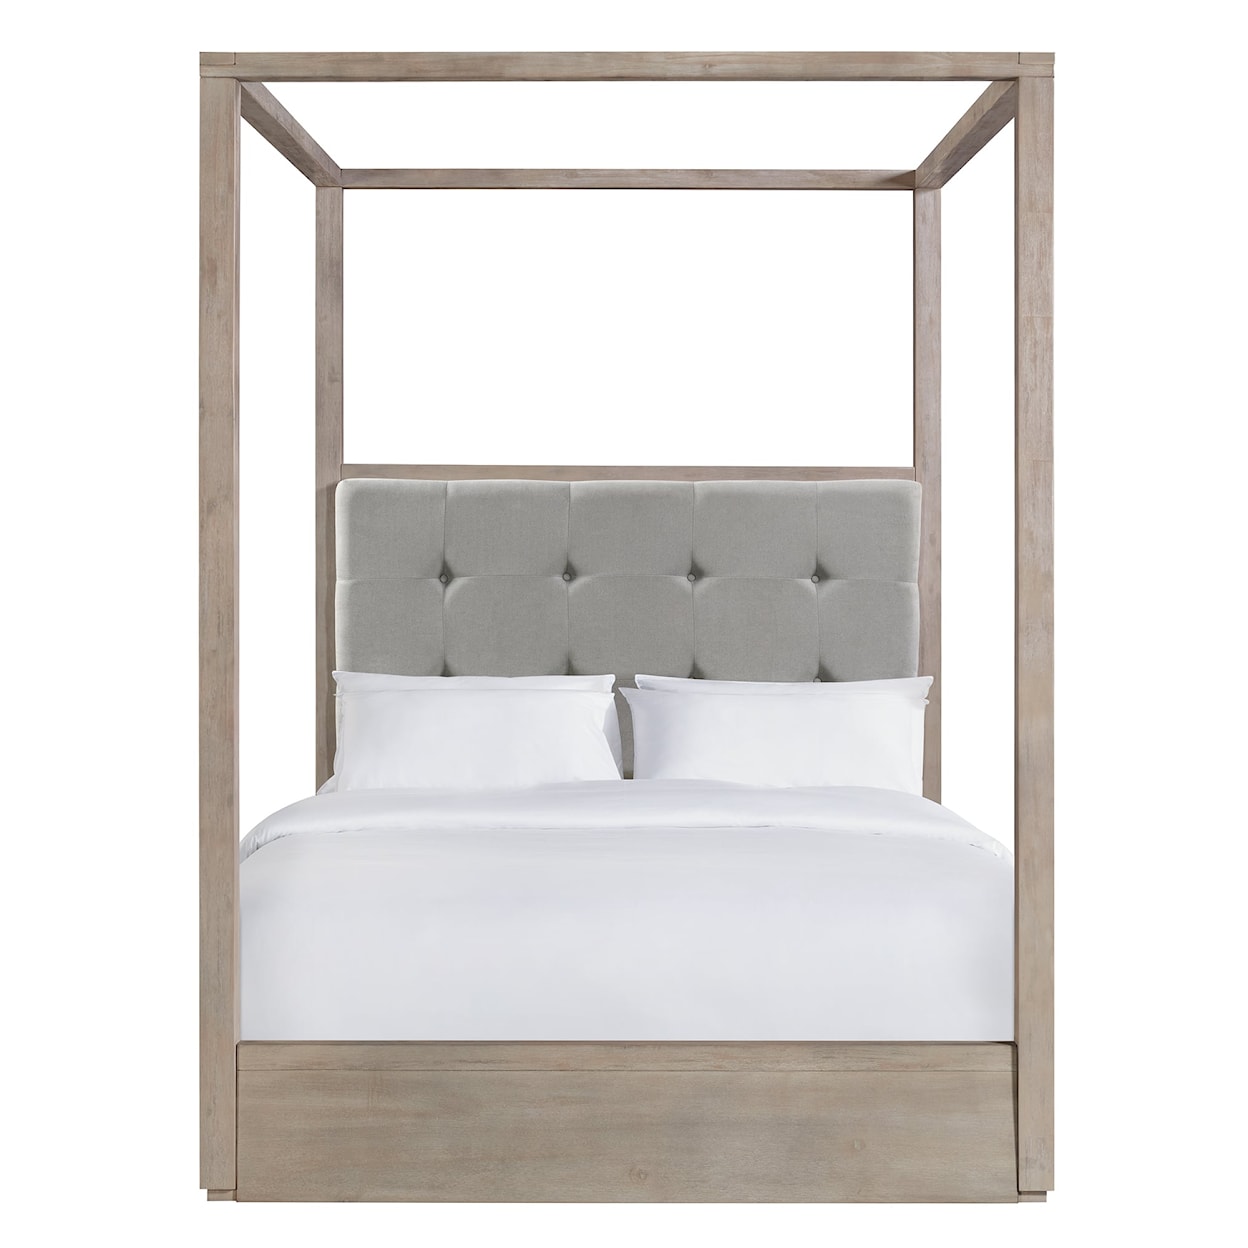 Elements International Arcadia Queen Canopy Bed